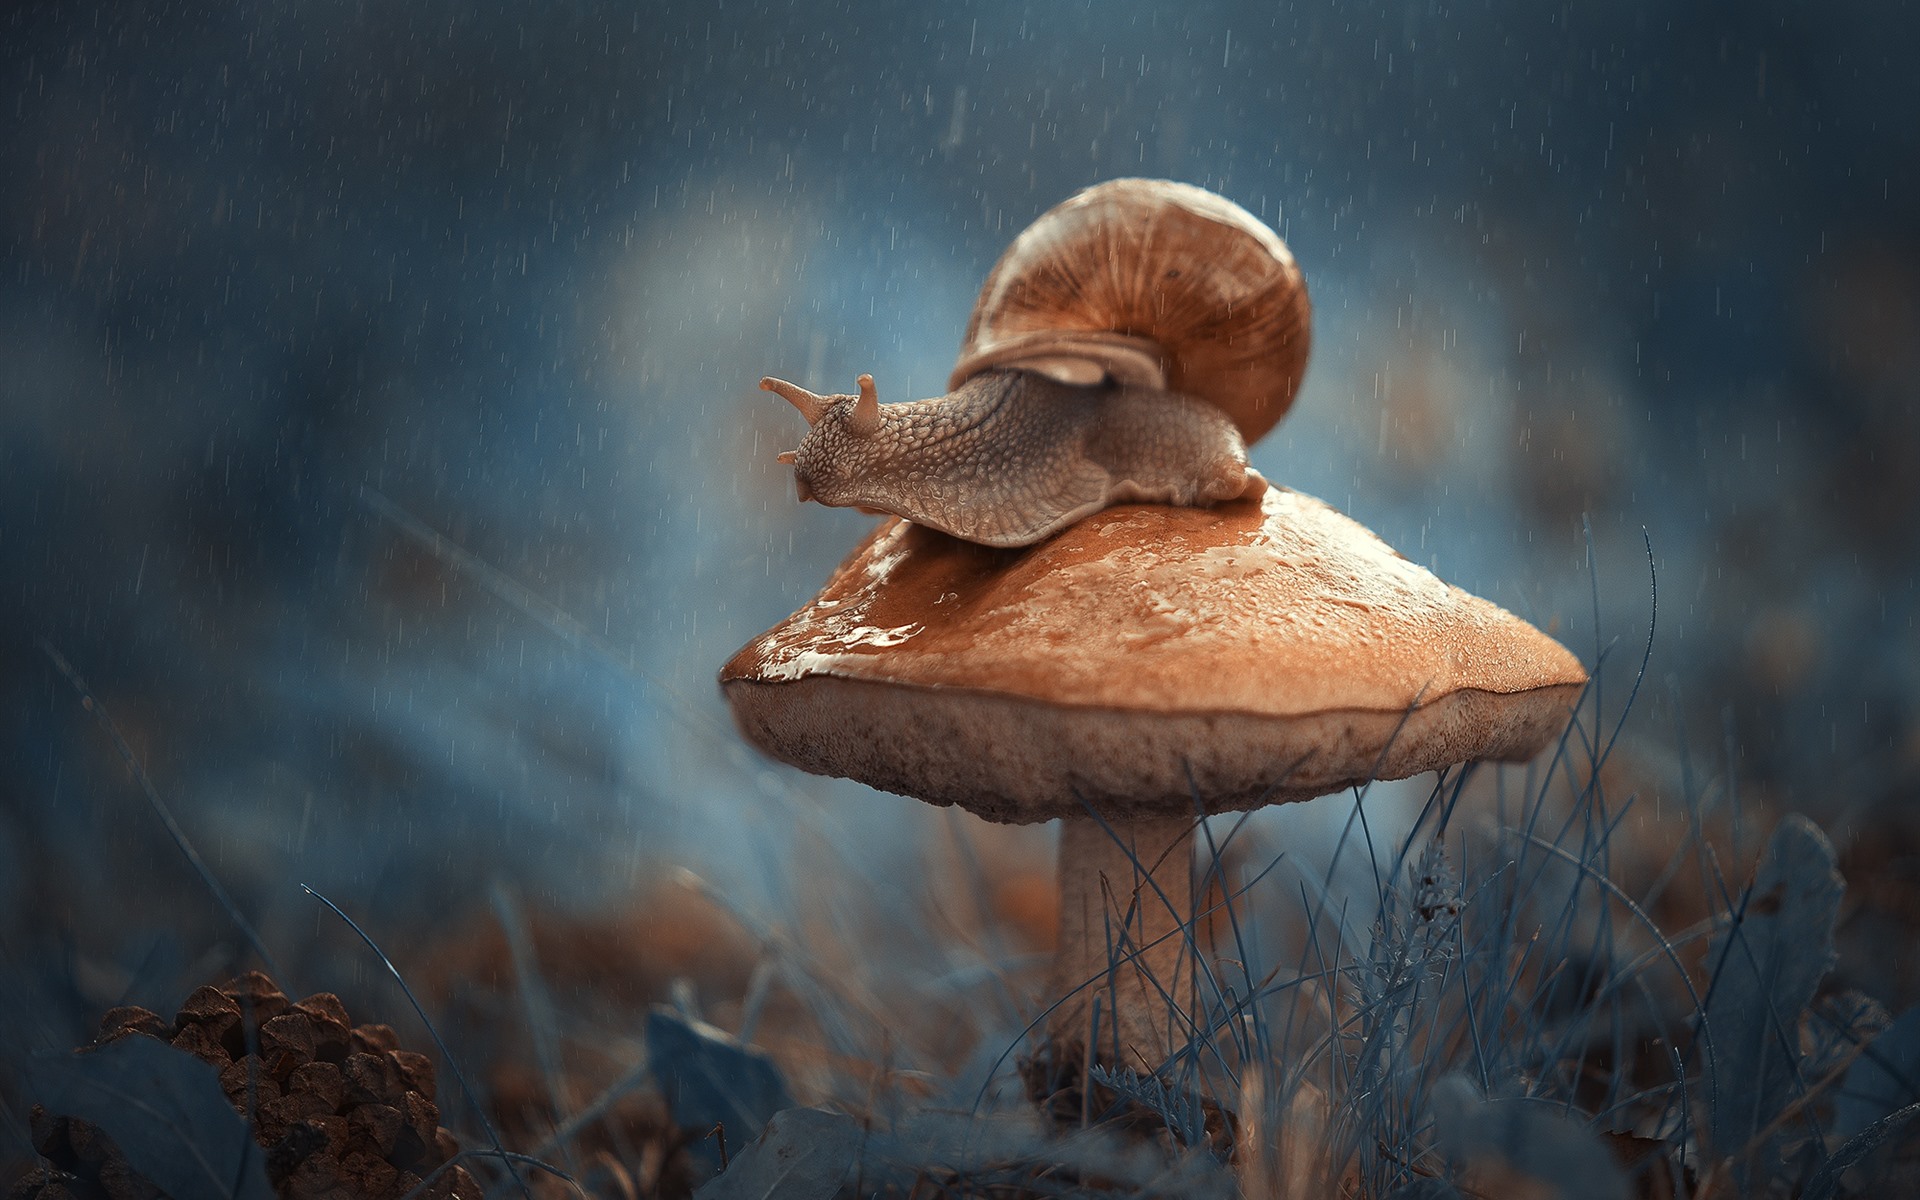 Snail images